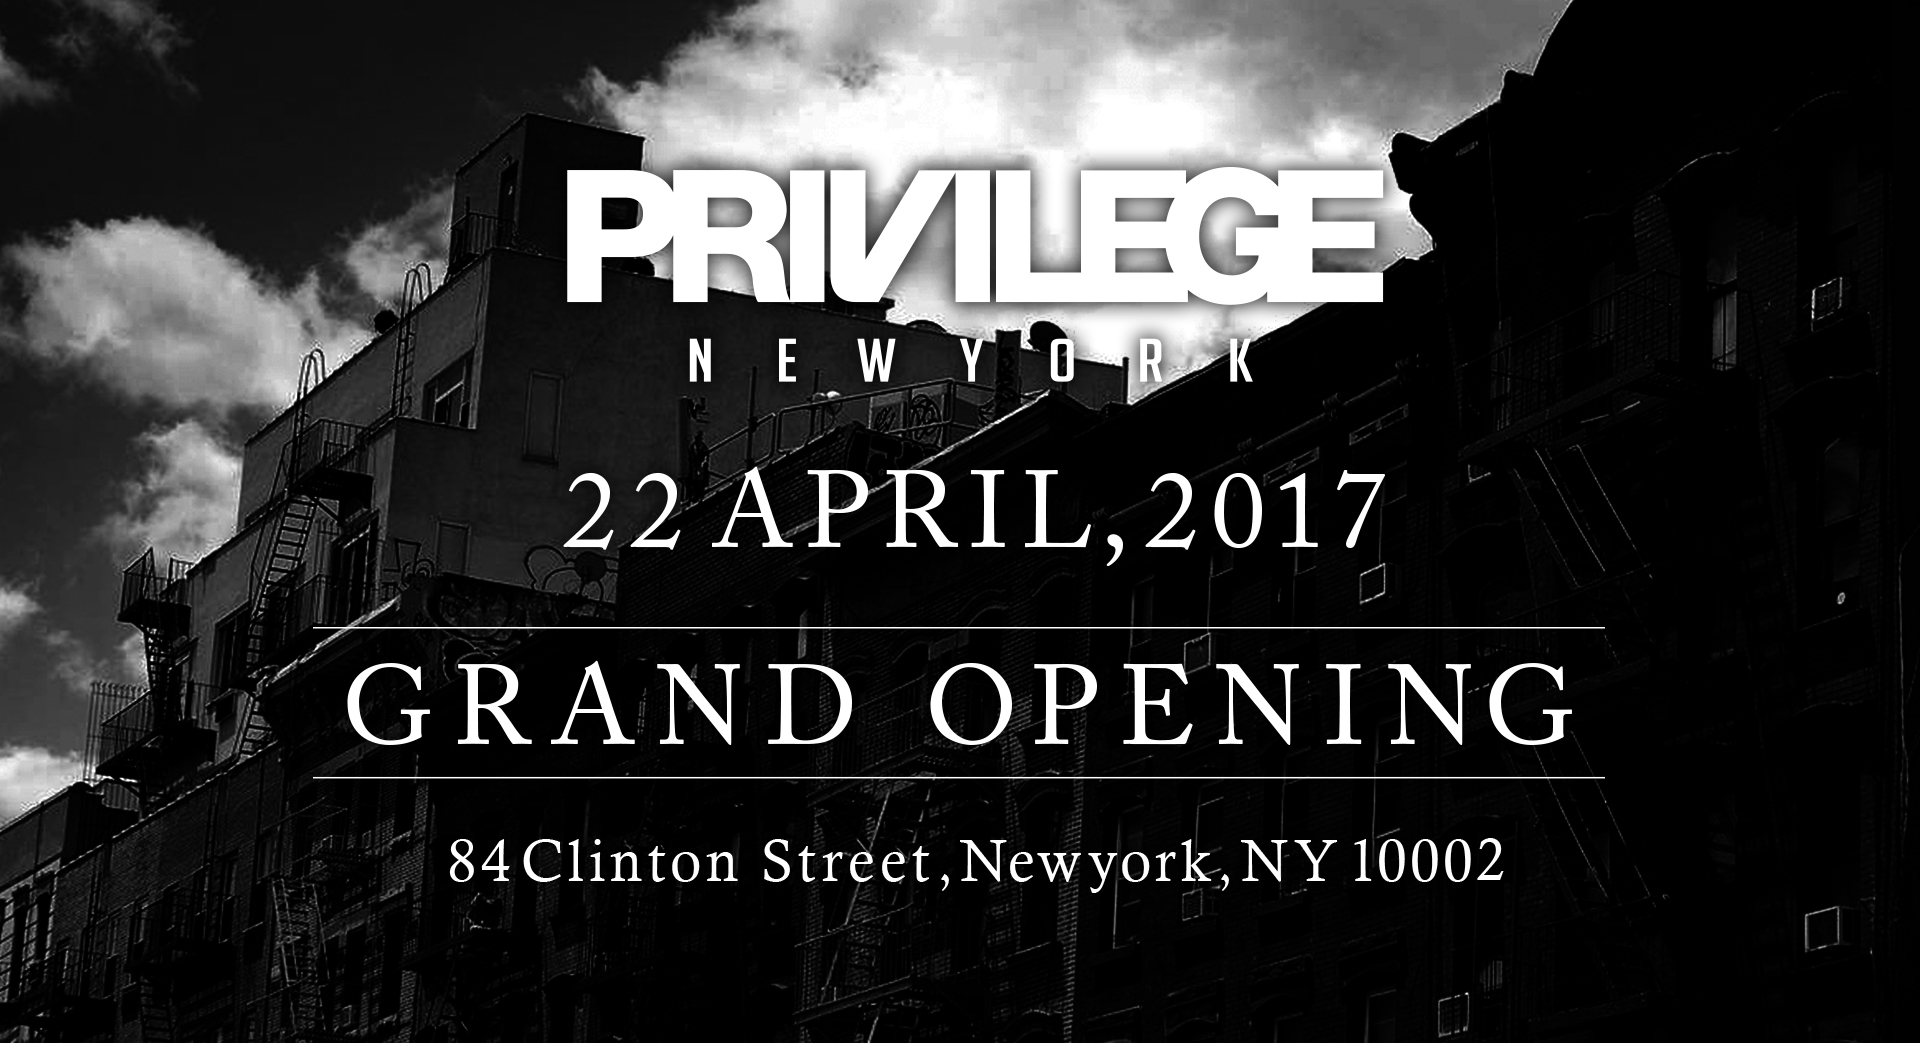 PRIVILEGE NEW YORK OPEN !!!